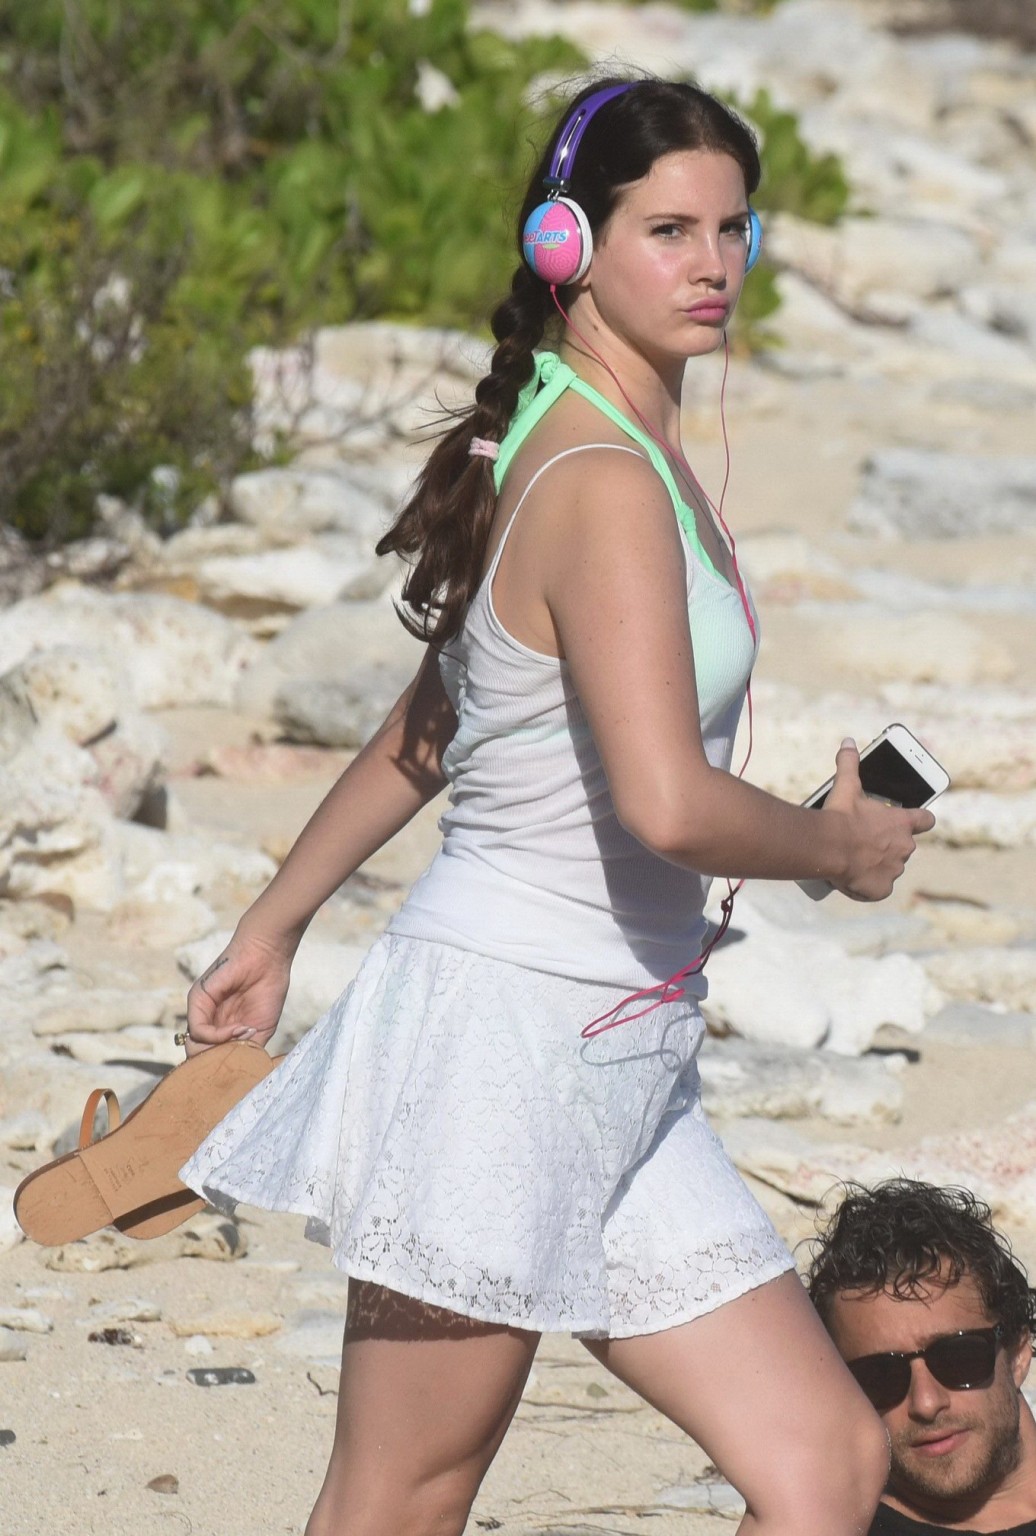 Lana del rey portant un bikini vert sur la plage de st barts
 #75176830